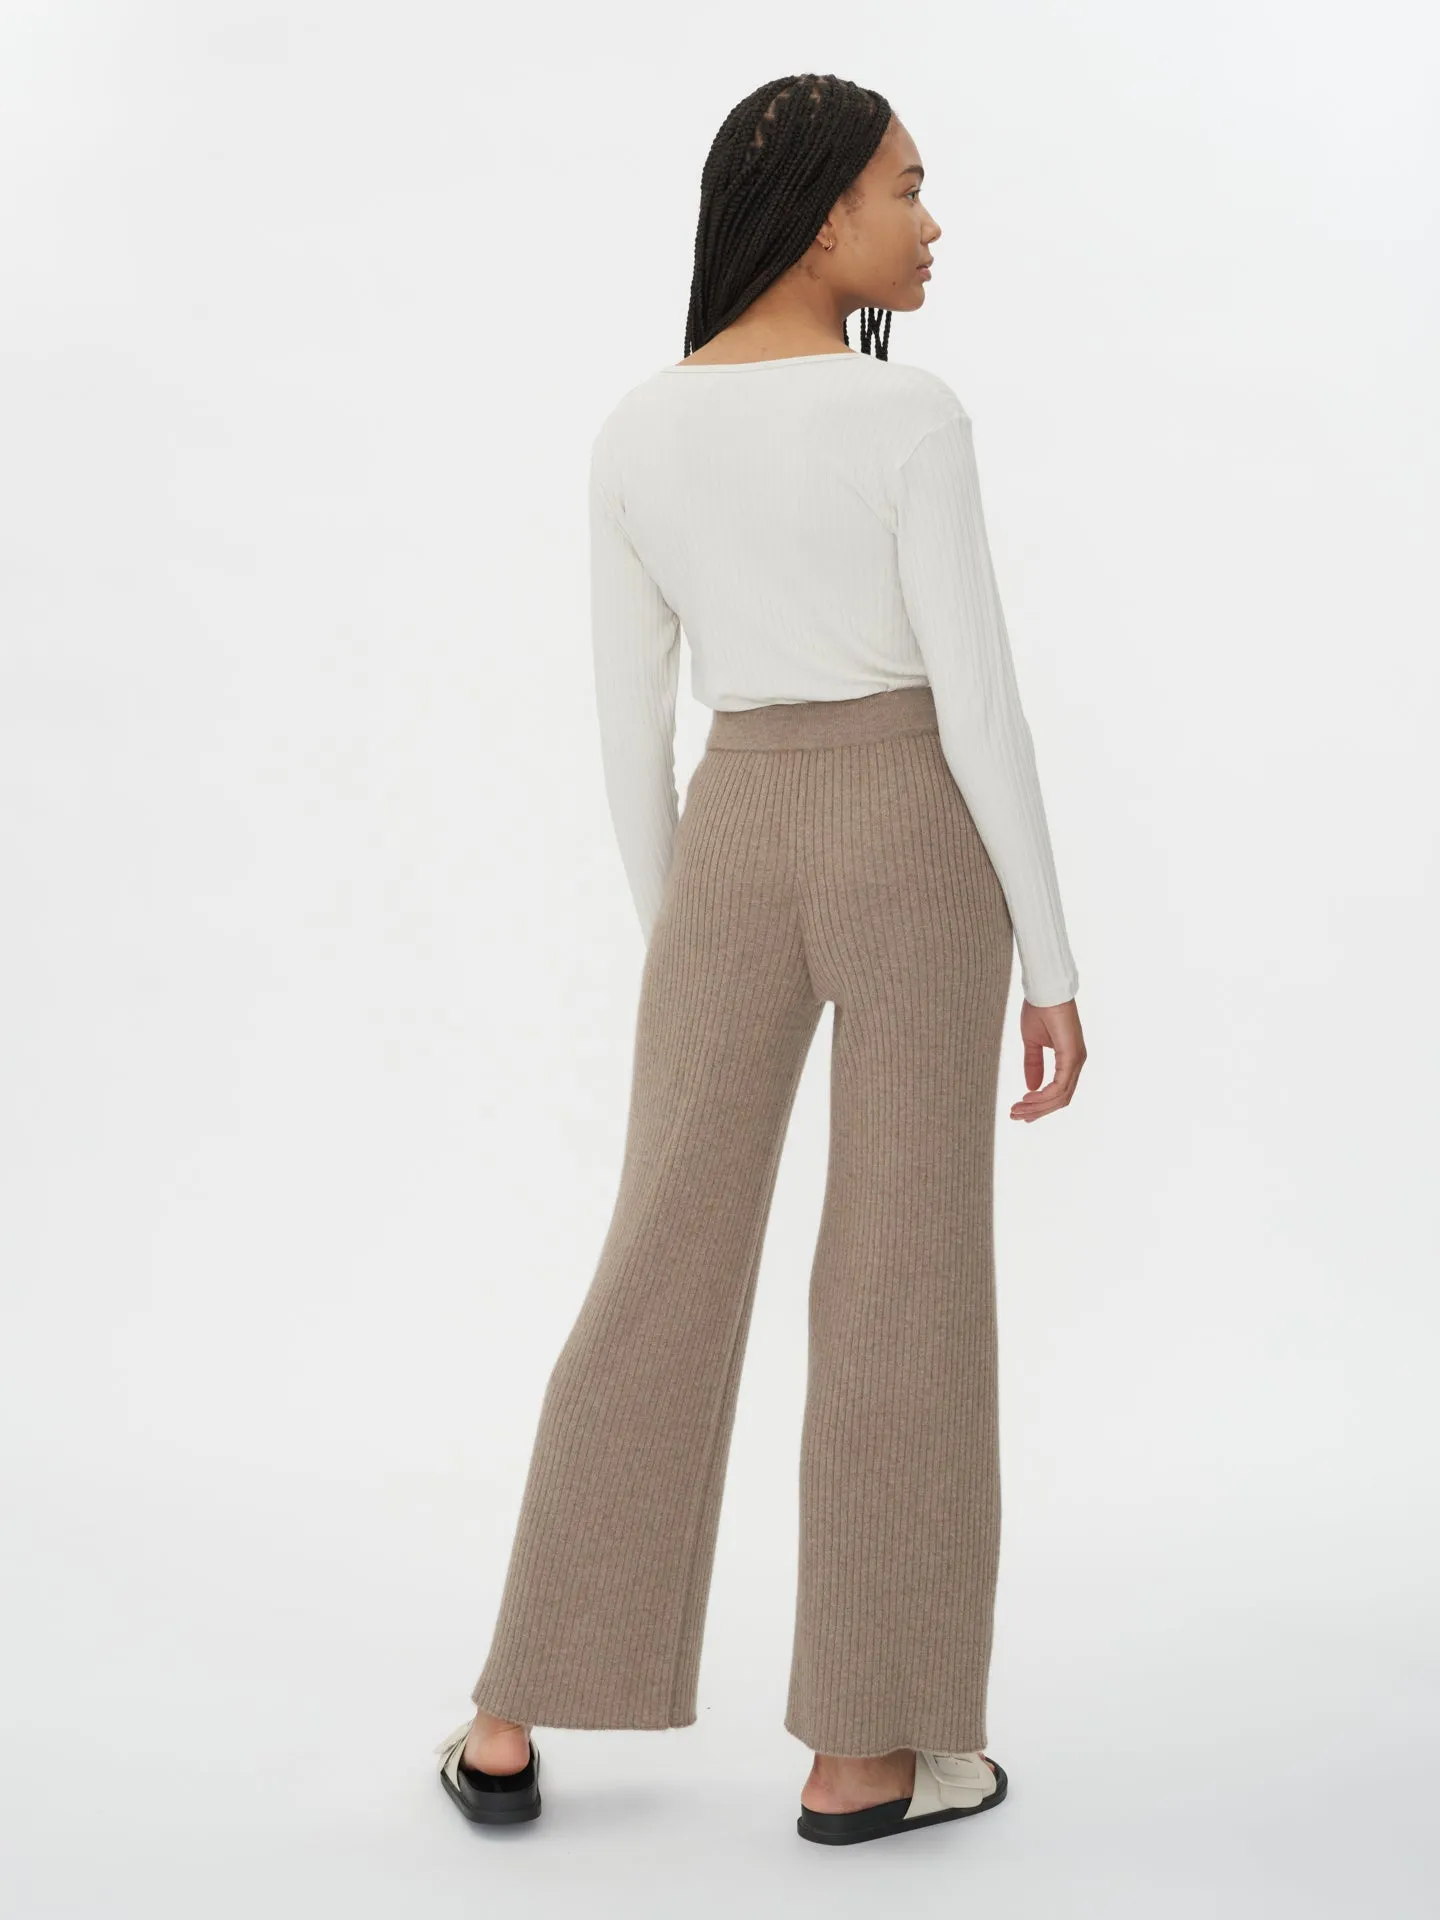 Women's Cashmere Pants Taupe - Gobi Cashmere